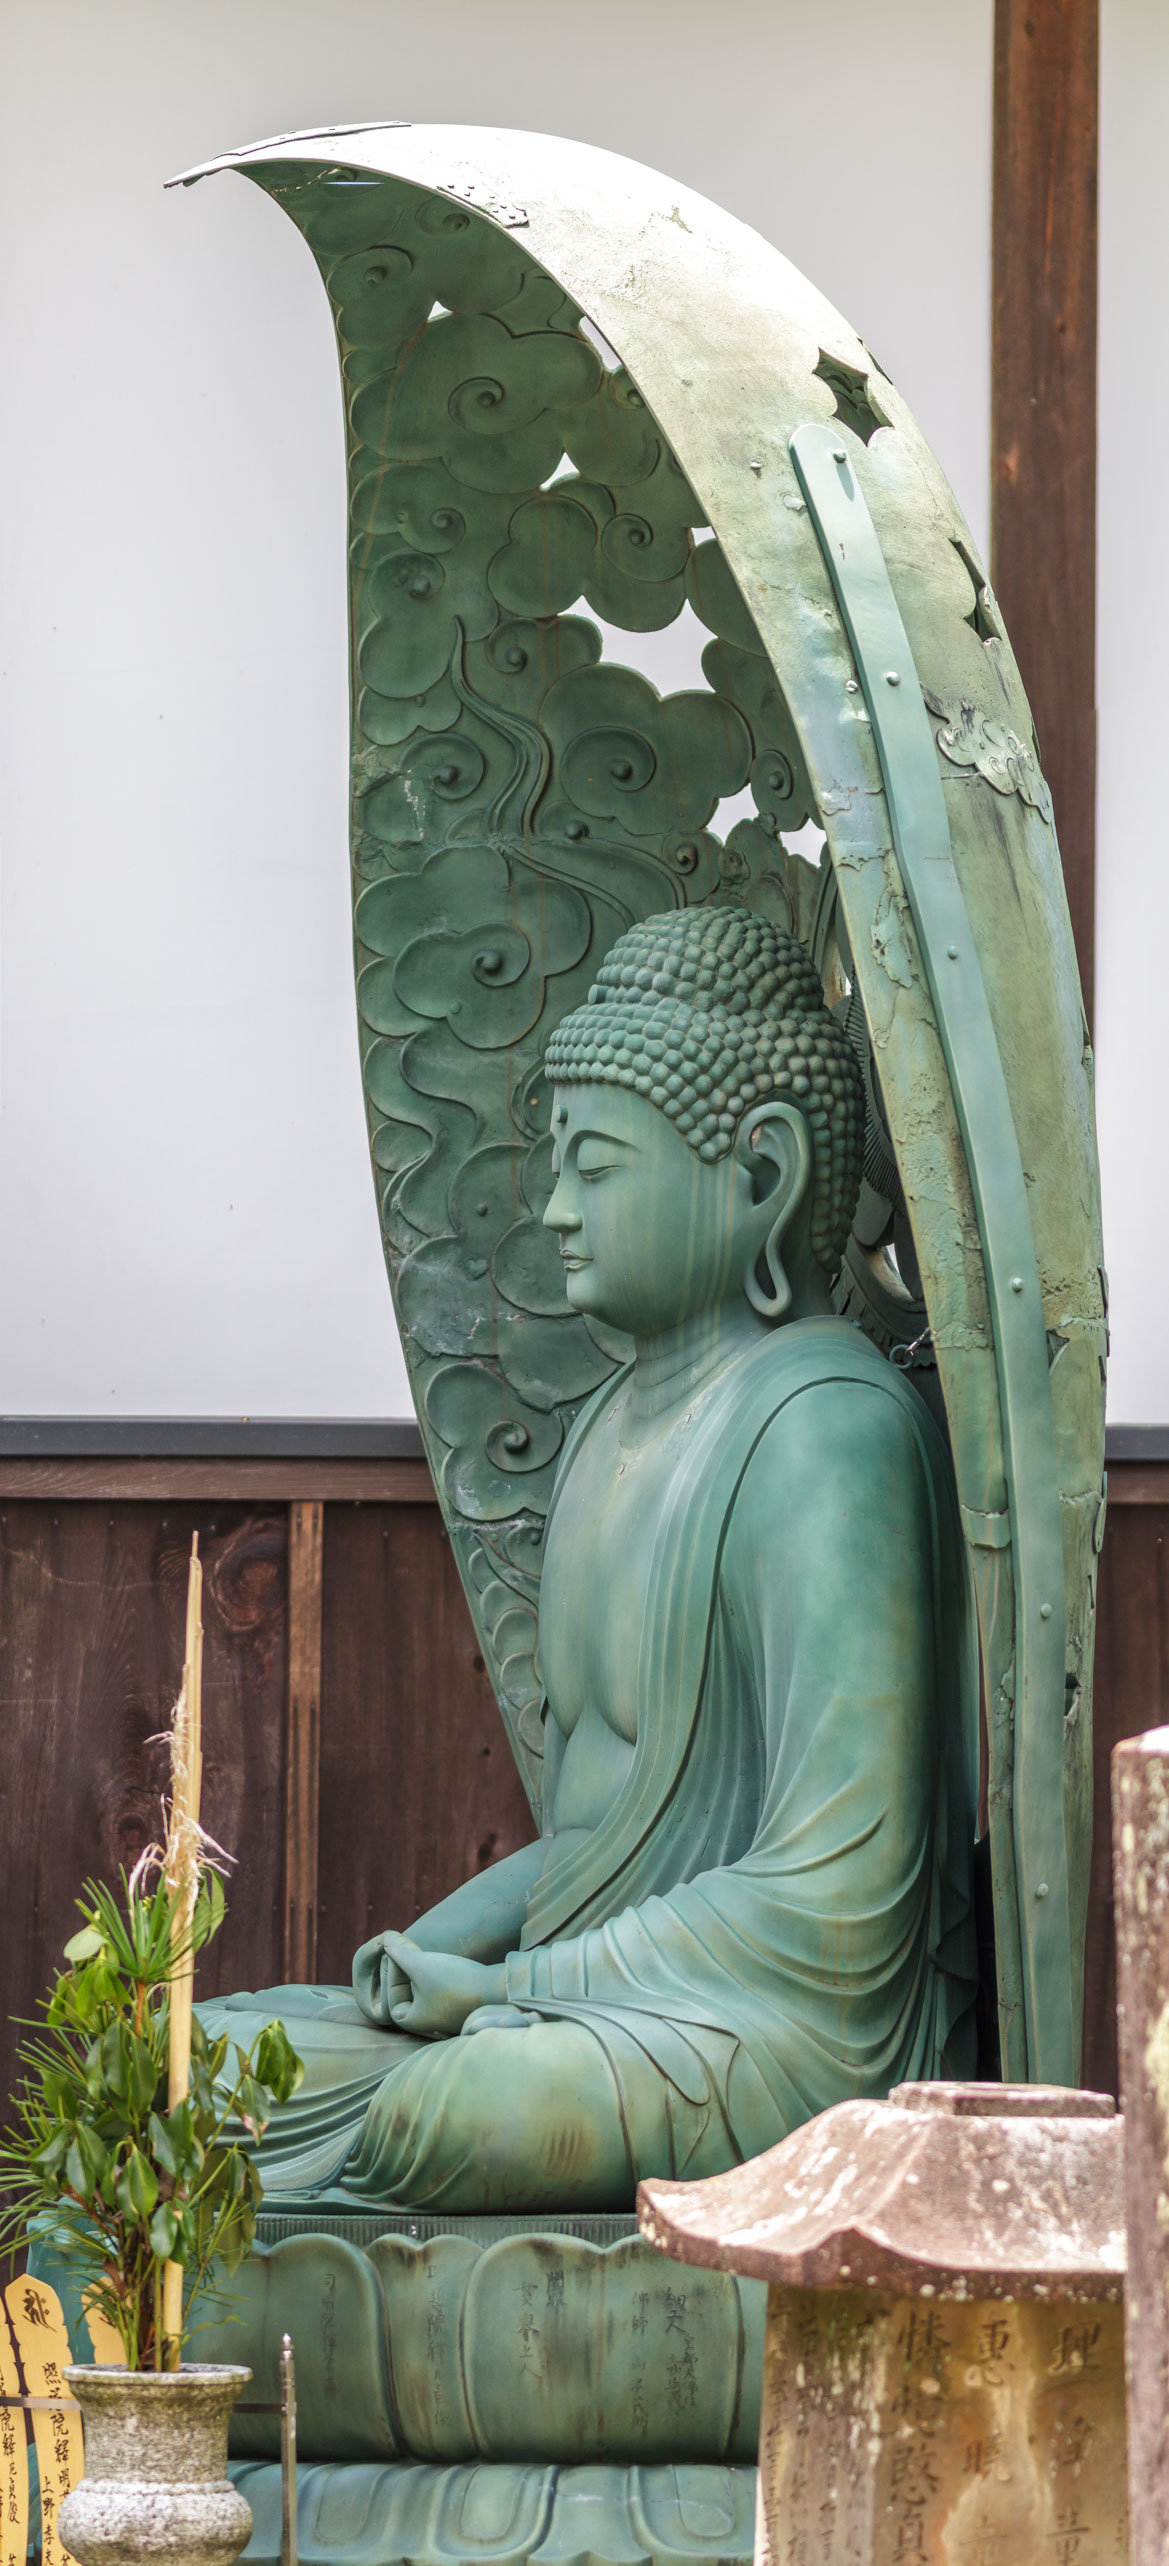 /Guewen/galeries/public/Voyages/Japon/kyoto/statues/Kyoto-statue_028.jpg